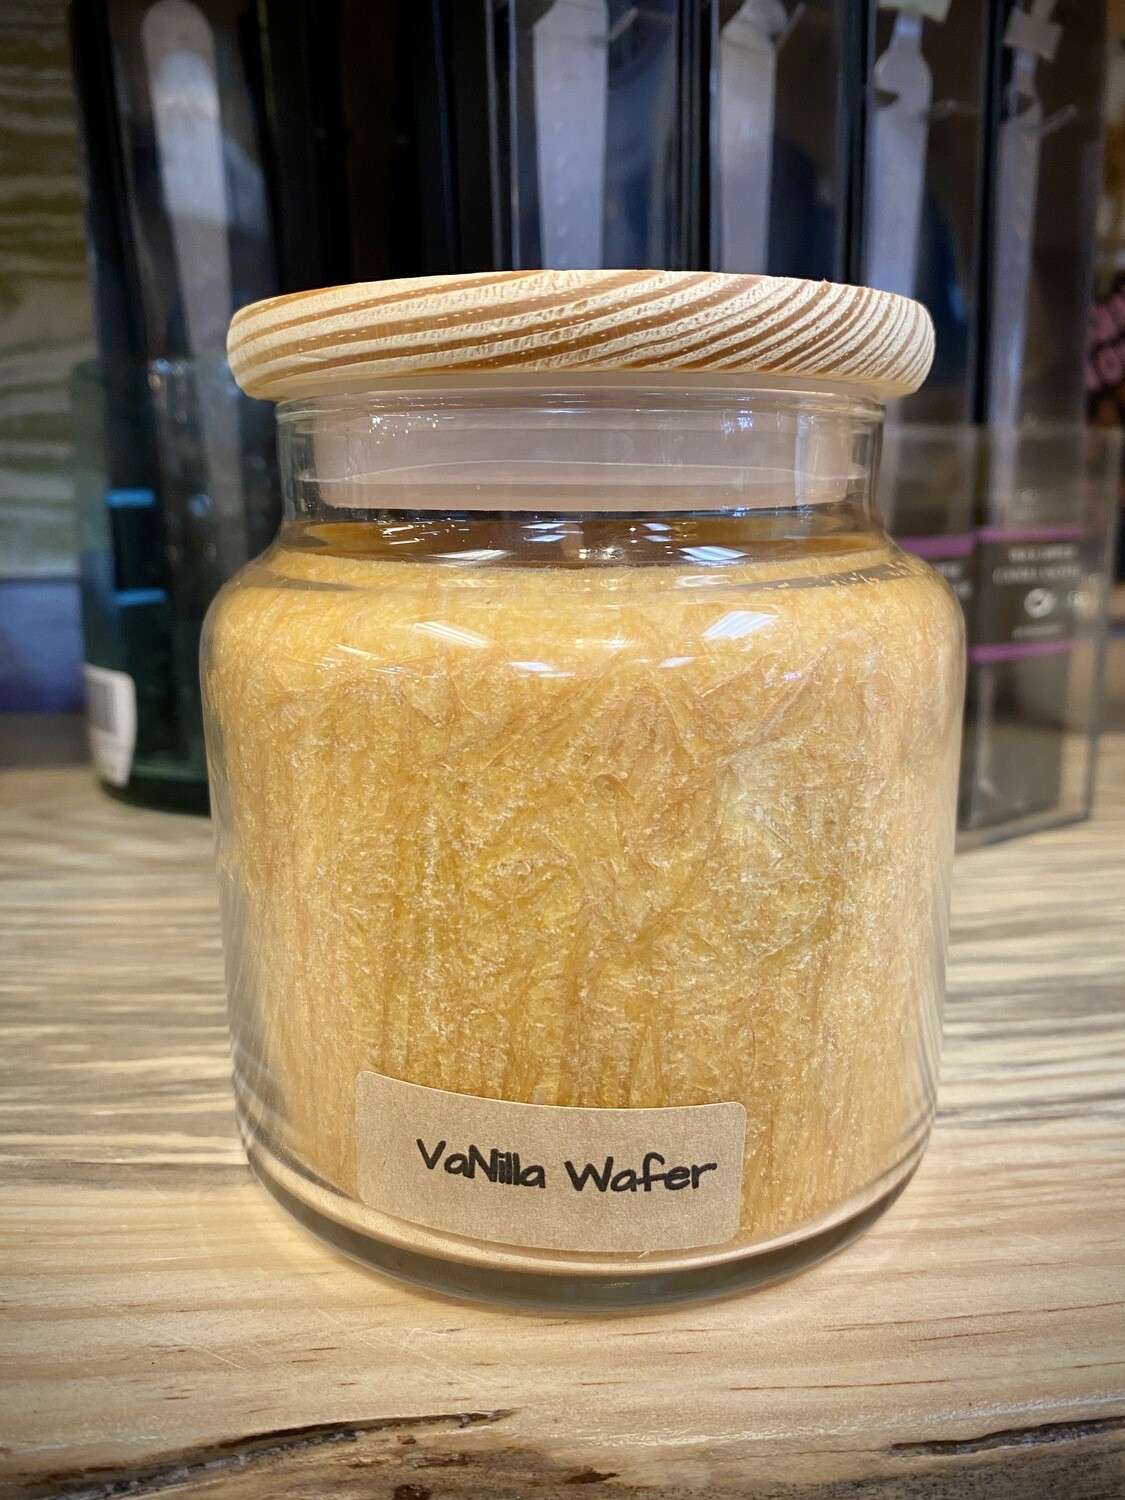 VaNilla Wafer Apothecary Jar Candle